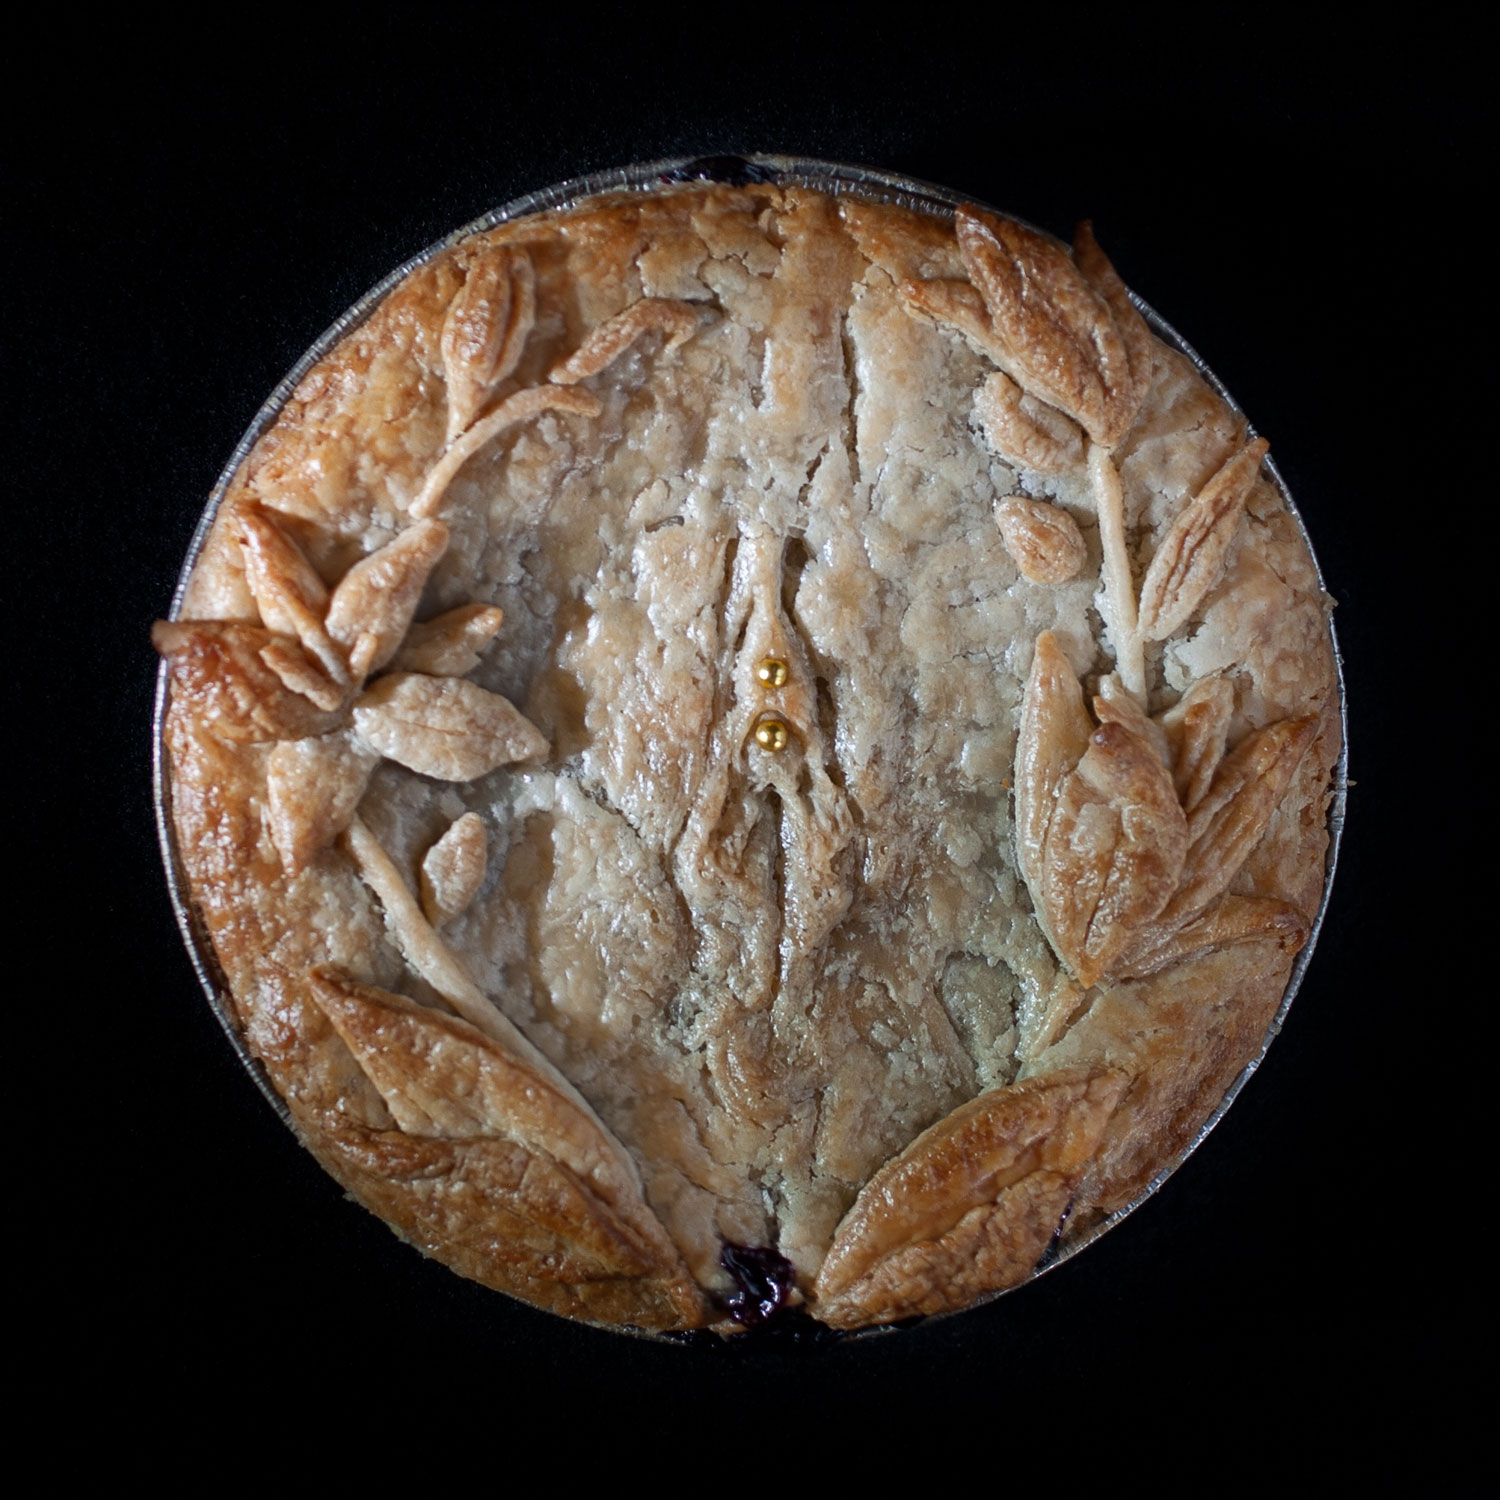 Baked vulva pie 47 with hand pie crust vulva and pie crust lilies surrounding the vulva